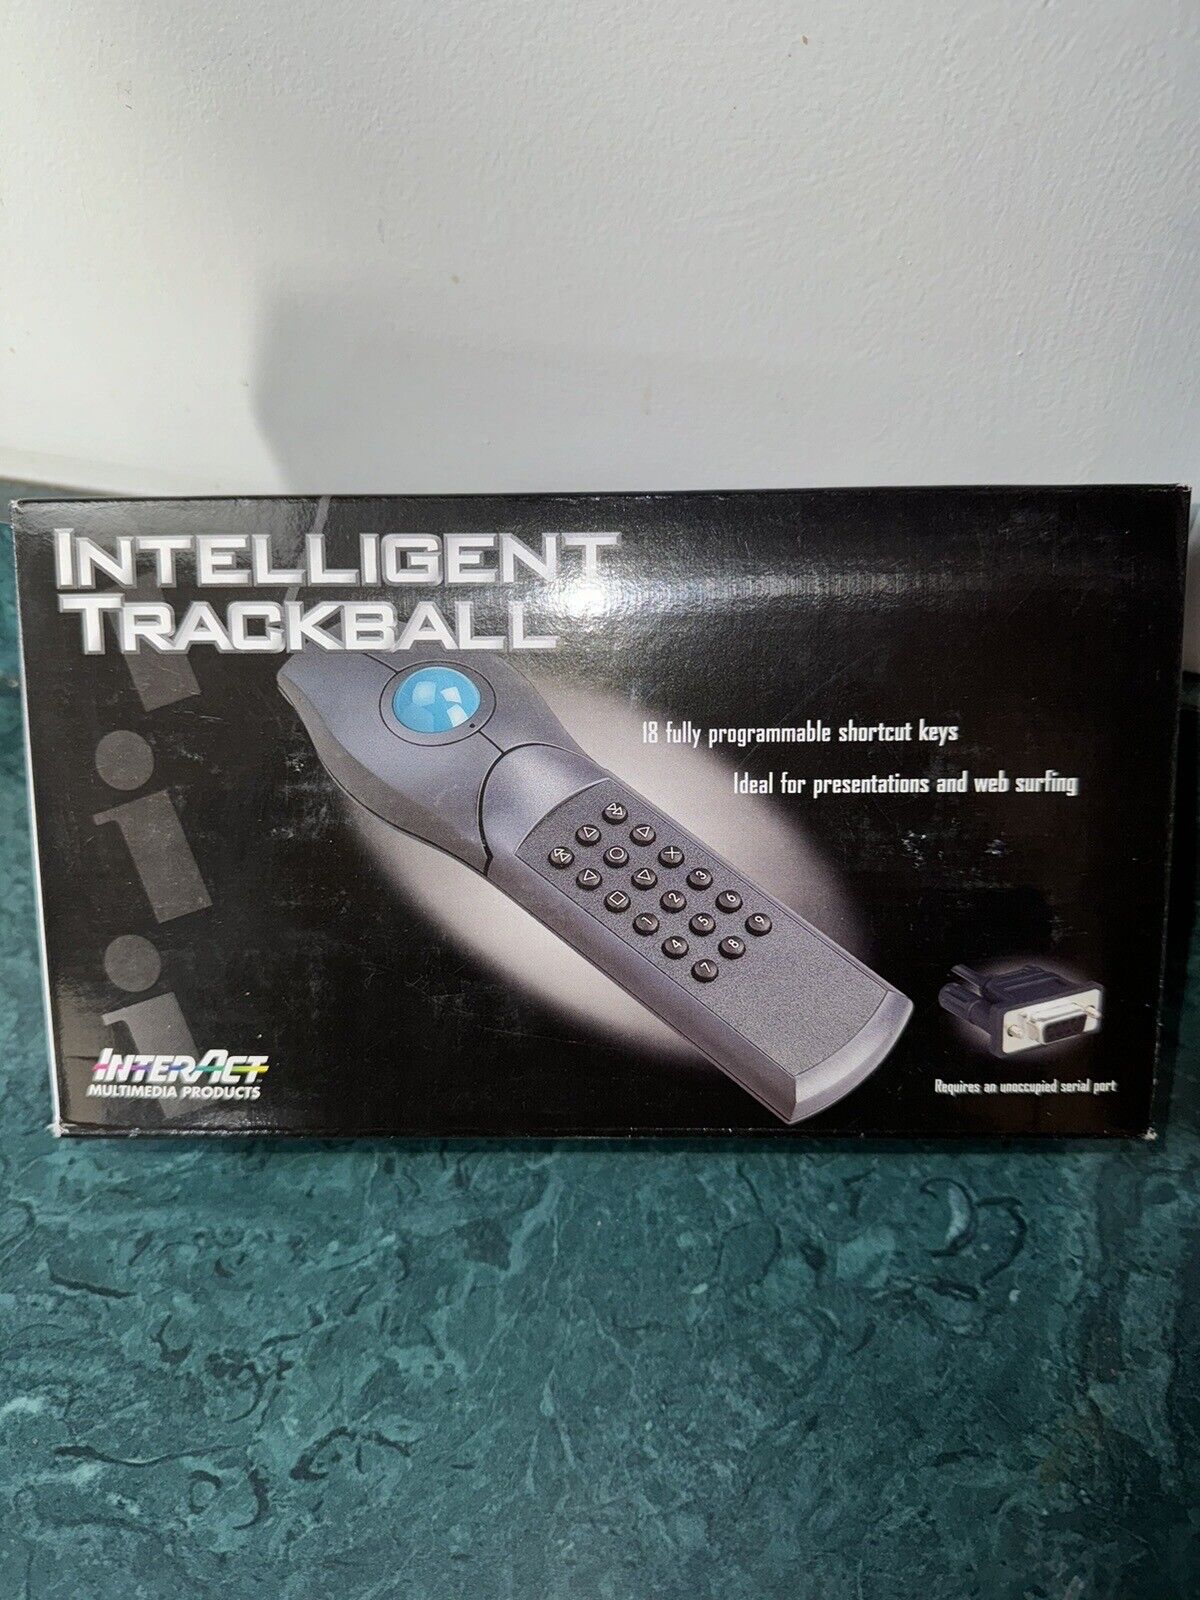 Vintage InterAct SV-2010 Wireless Intelligent Trackball 18 Button Remote NOS